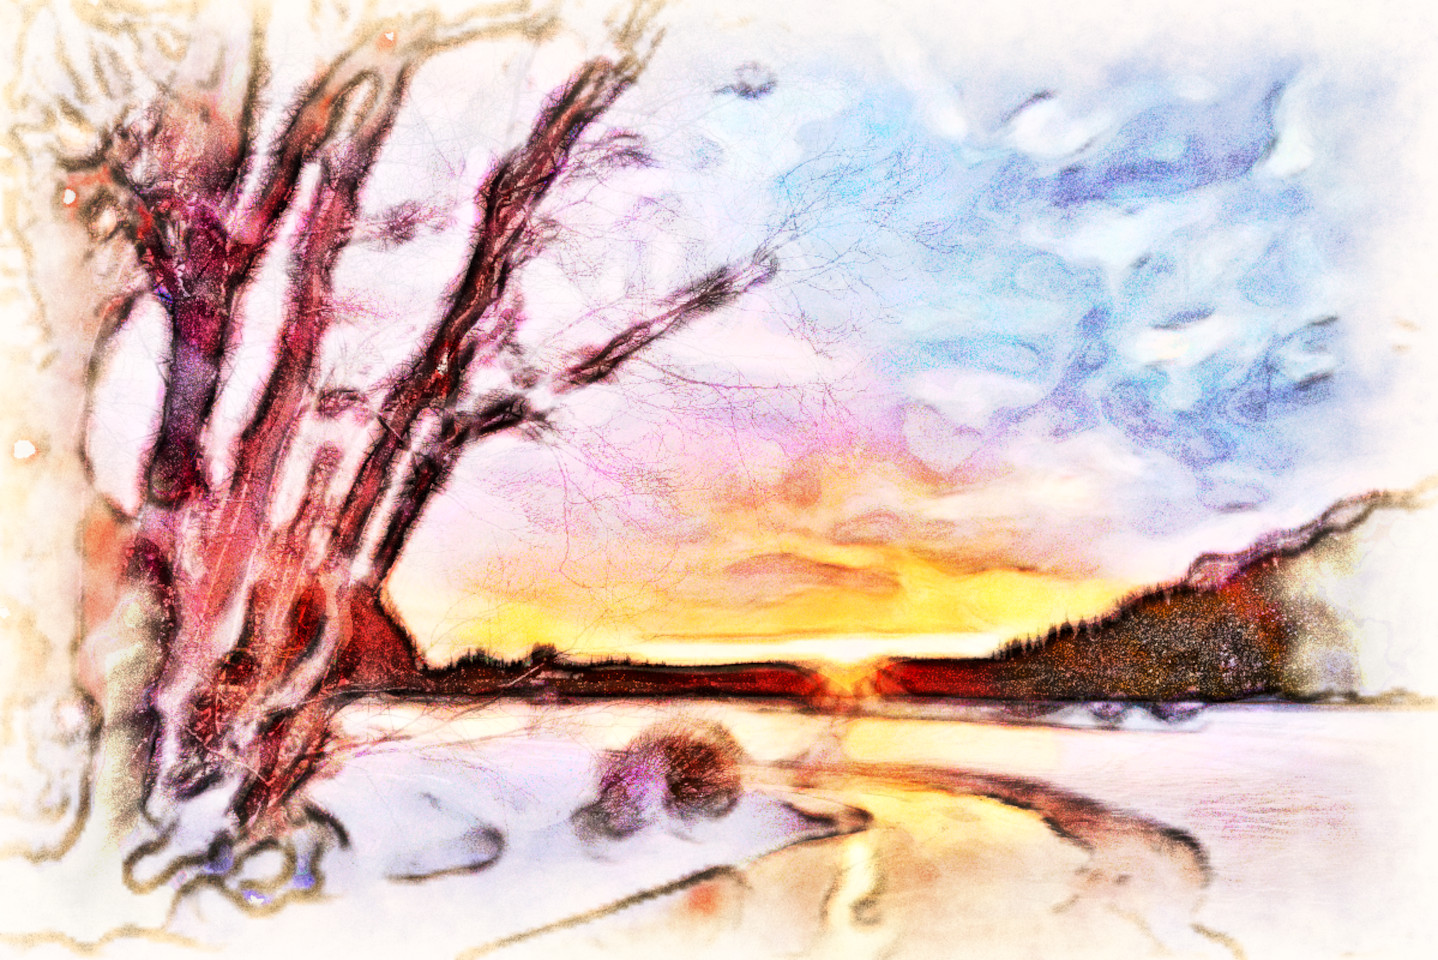 2023-10-03 10-04-35 winter-landscape-2995987 with a Watercolor Pastels Effect 2023 (15.0,75.0,32.0,50.0,10.0,0.0,75.0,True,0).jpg